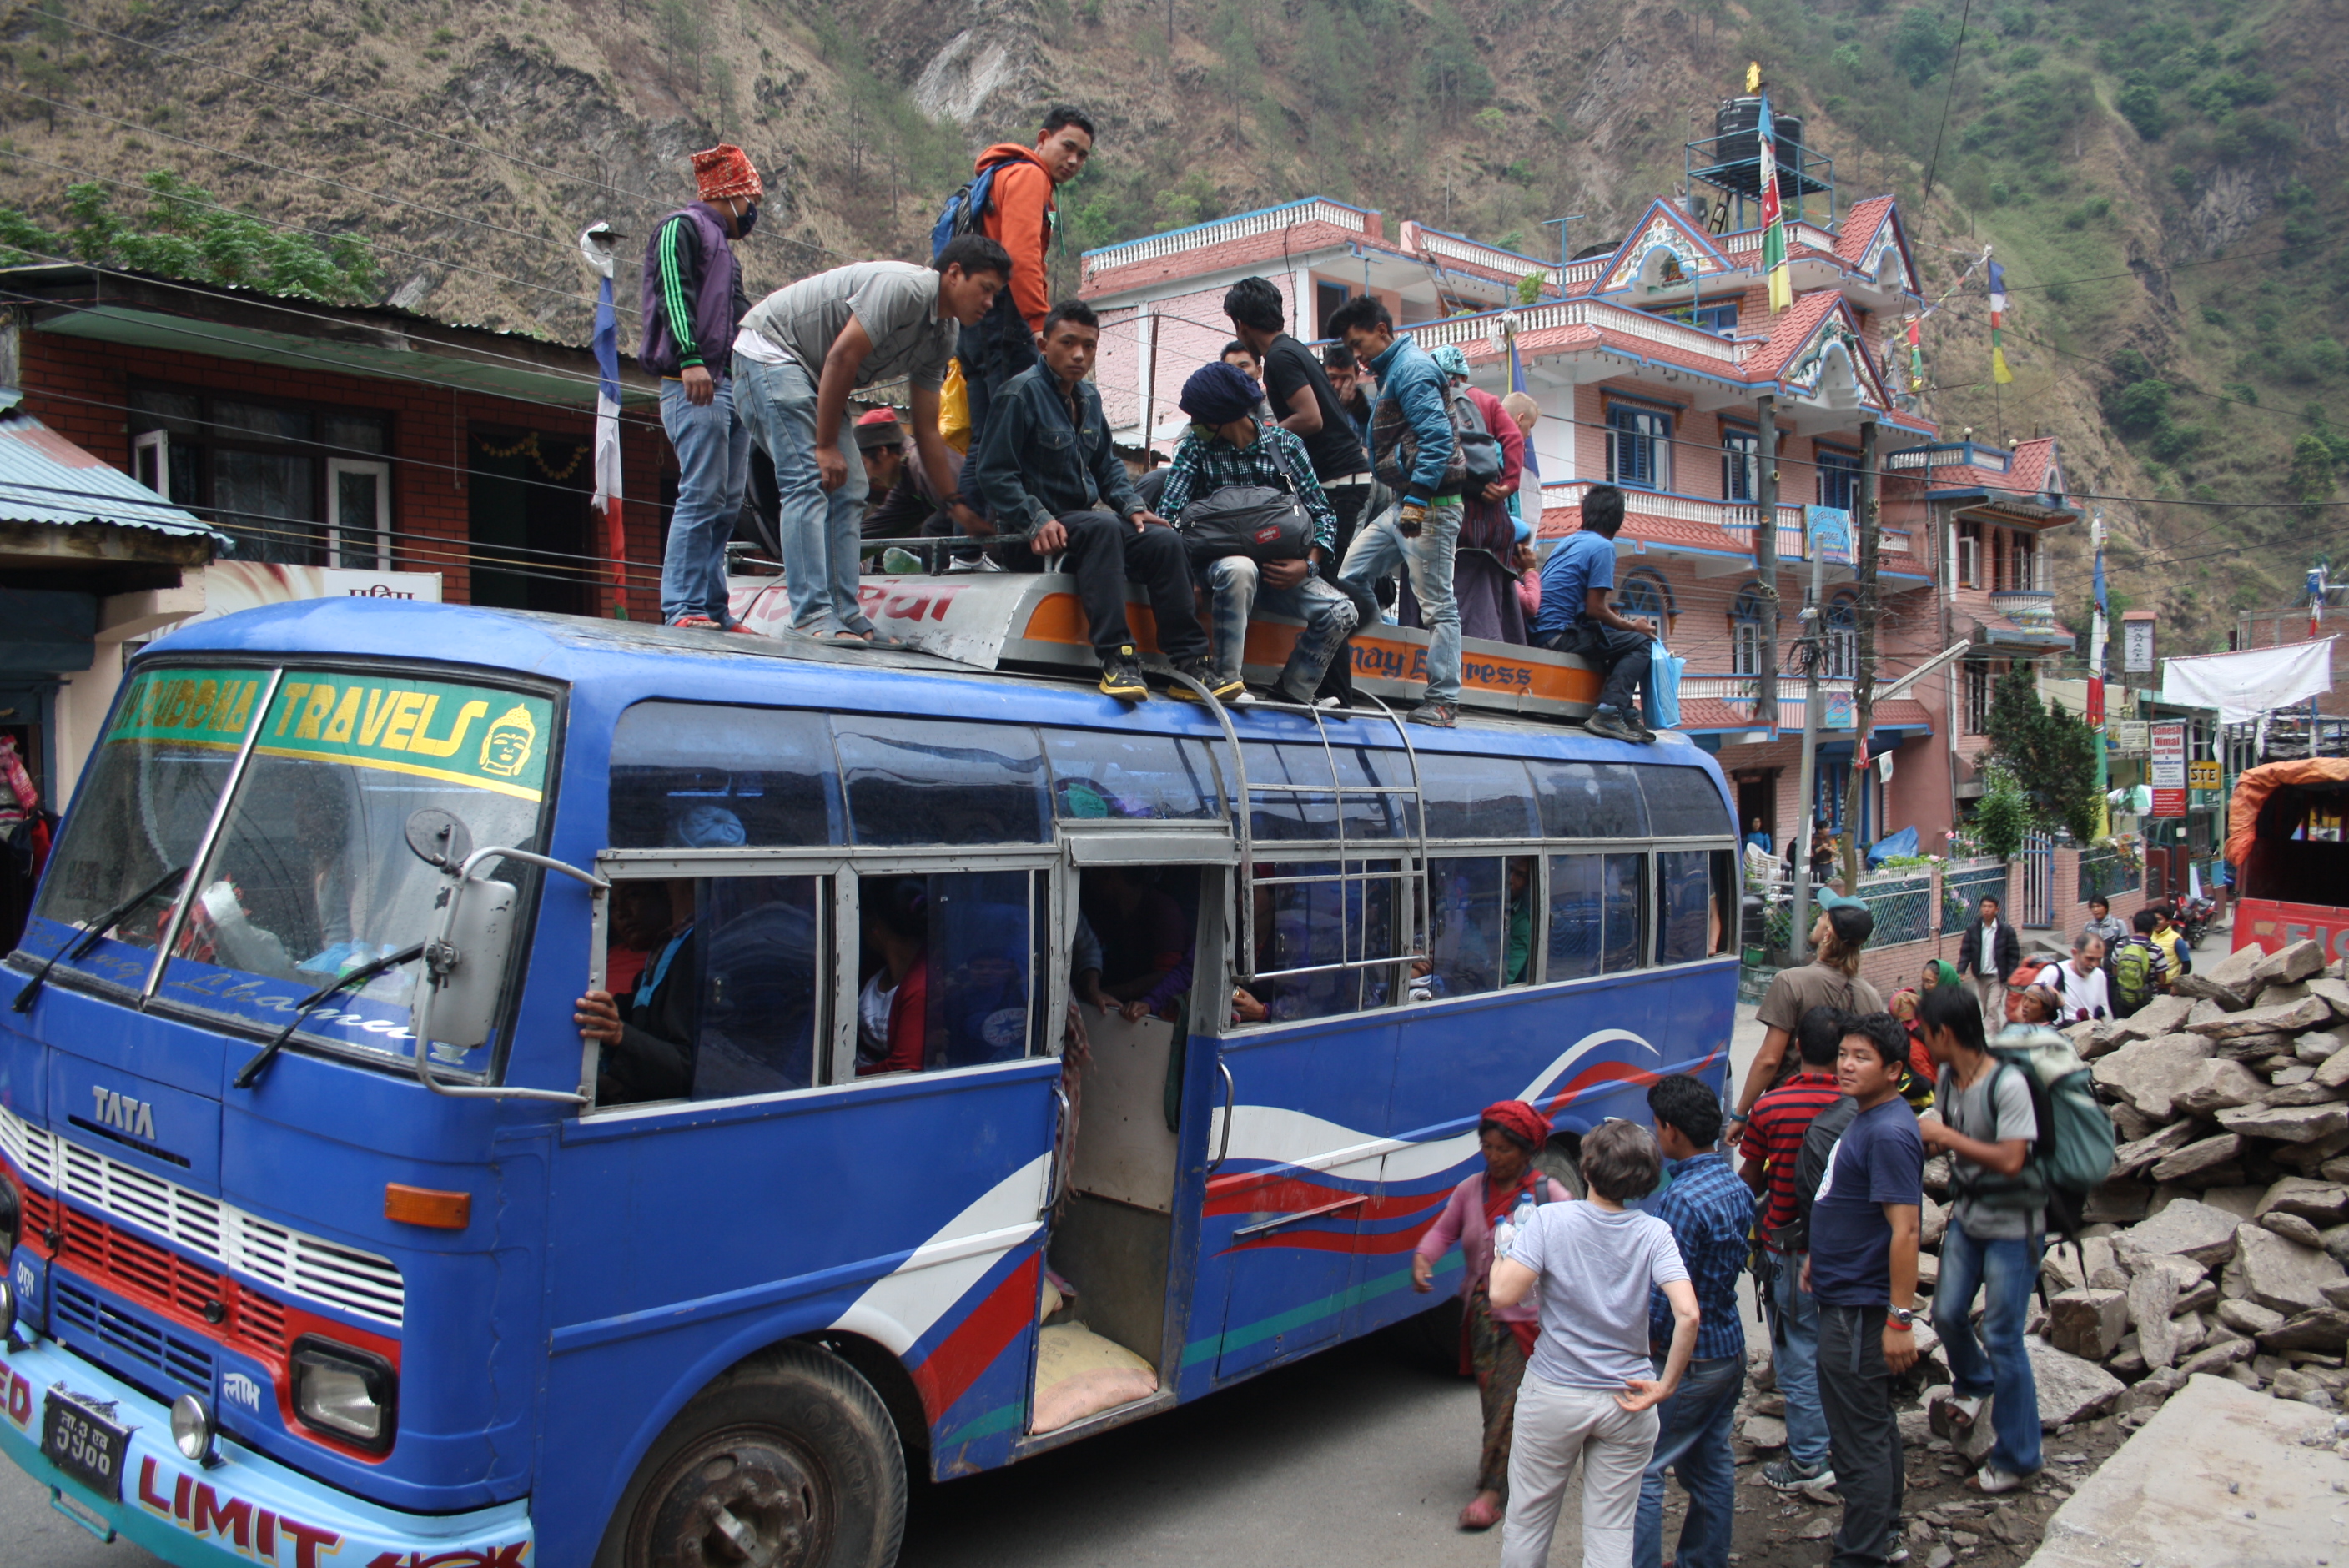 Transport mal anders - Buspassagiere sitzen in Nepal sogar auf dem Dach